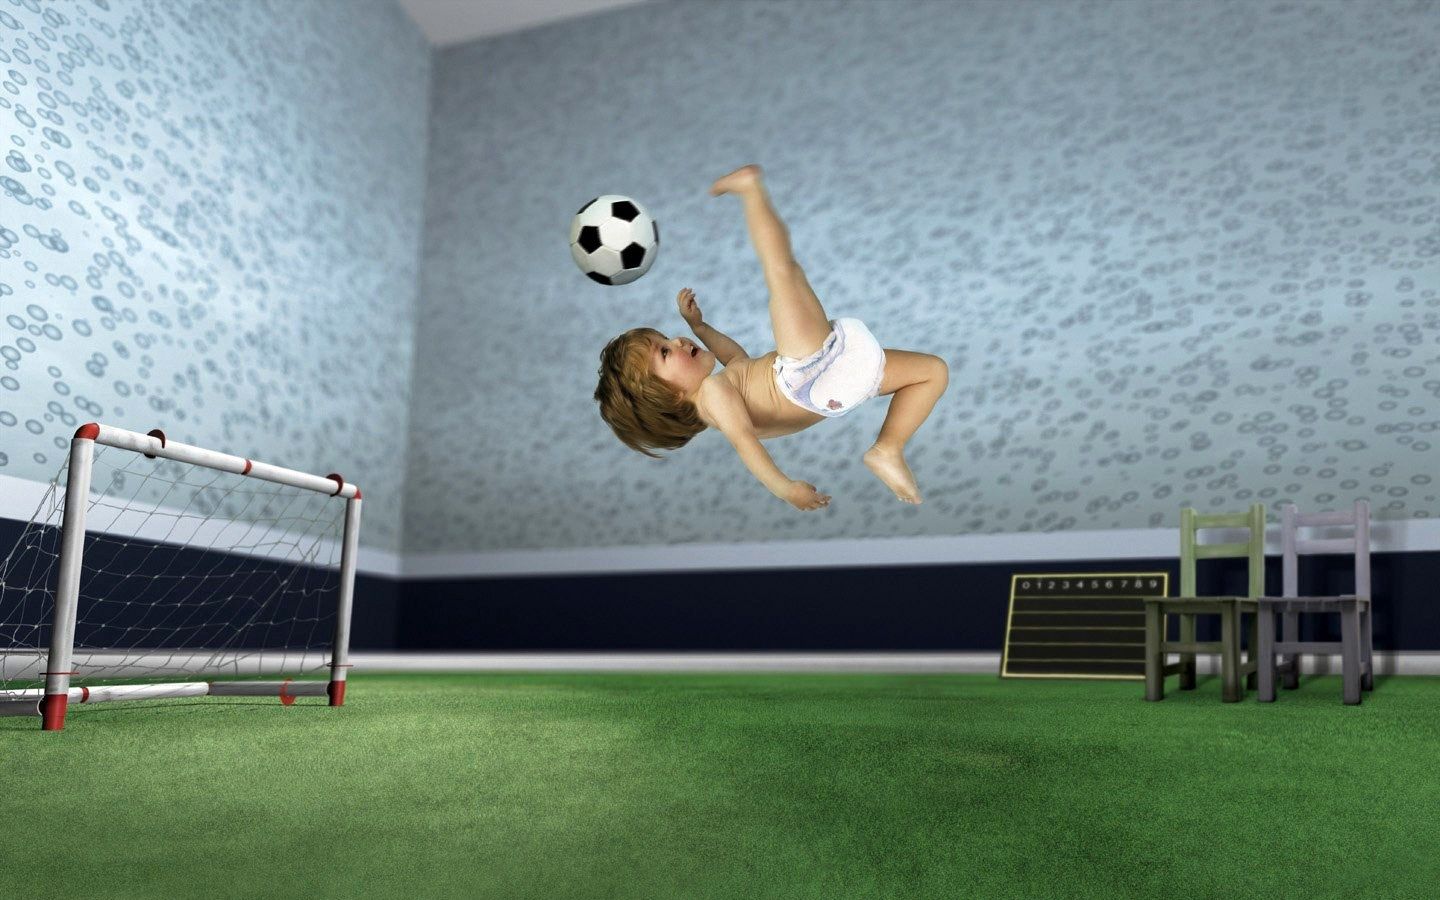 Soccer Funny Wallpaper Hd - 1440x900 Wallpaper 